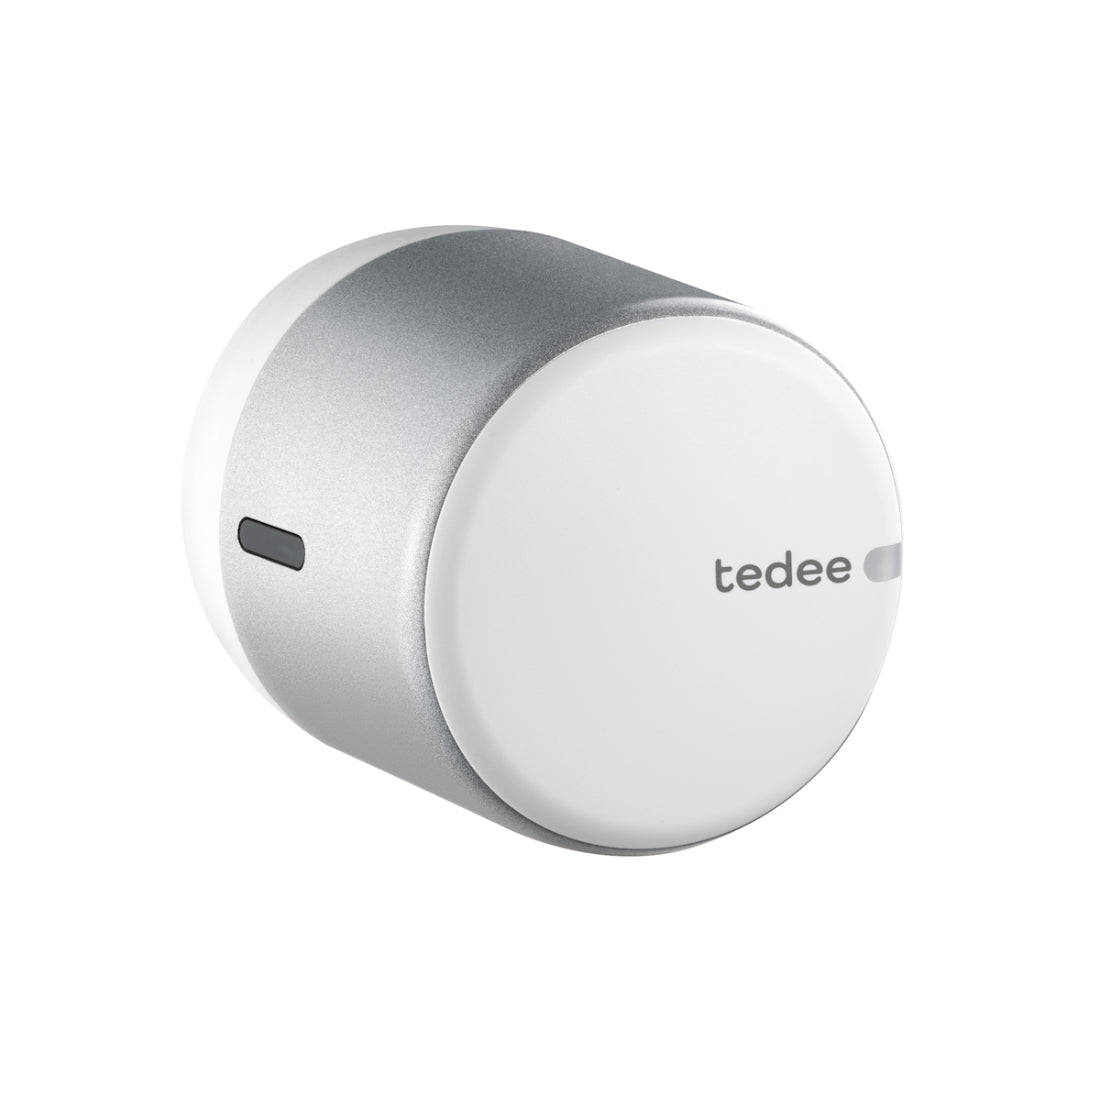 Tedee Go Smart Door Lock Kit - Silver/White - قفل ذكية - Store 974 | ستور ٩٧٤